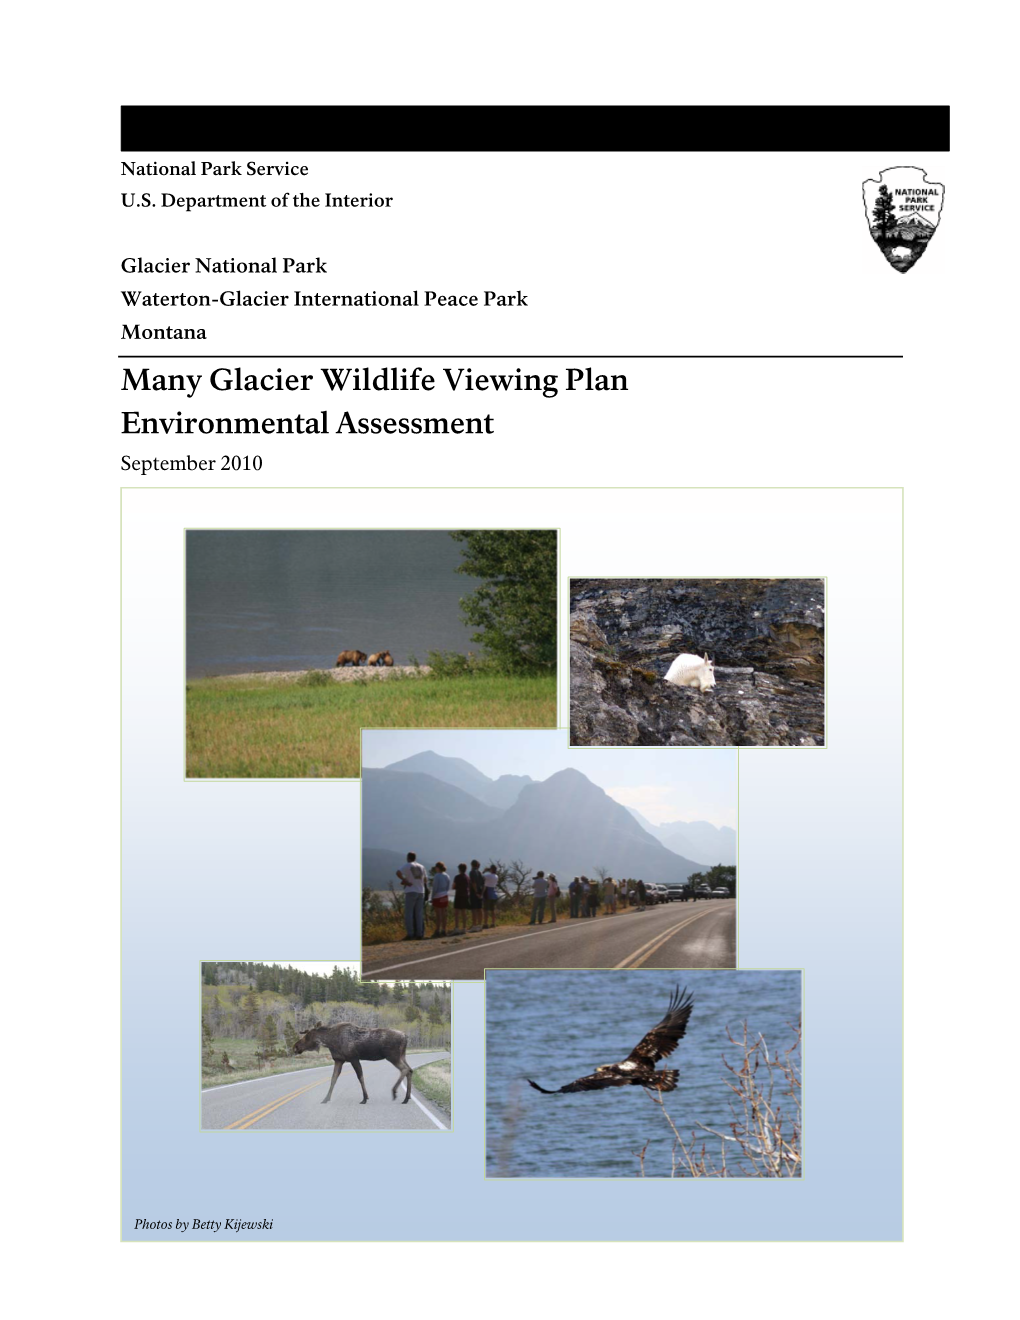 Many Glacier Wildlife Viewing Plan Environmental Assessment September 2010